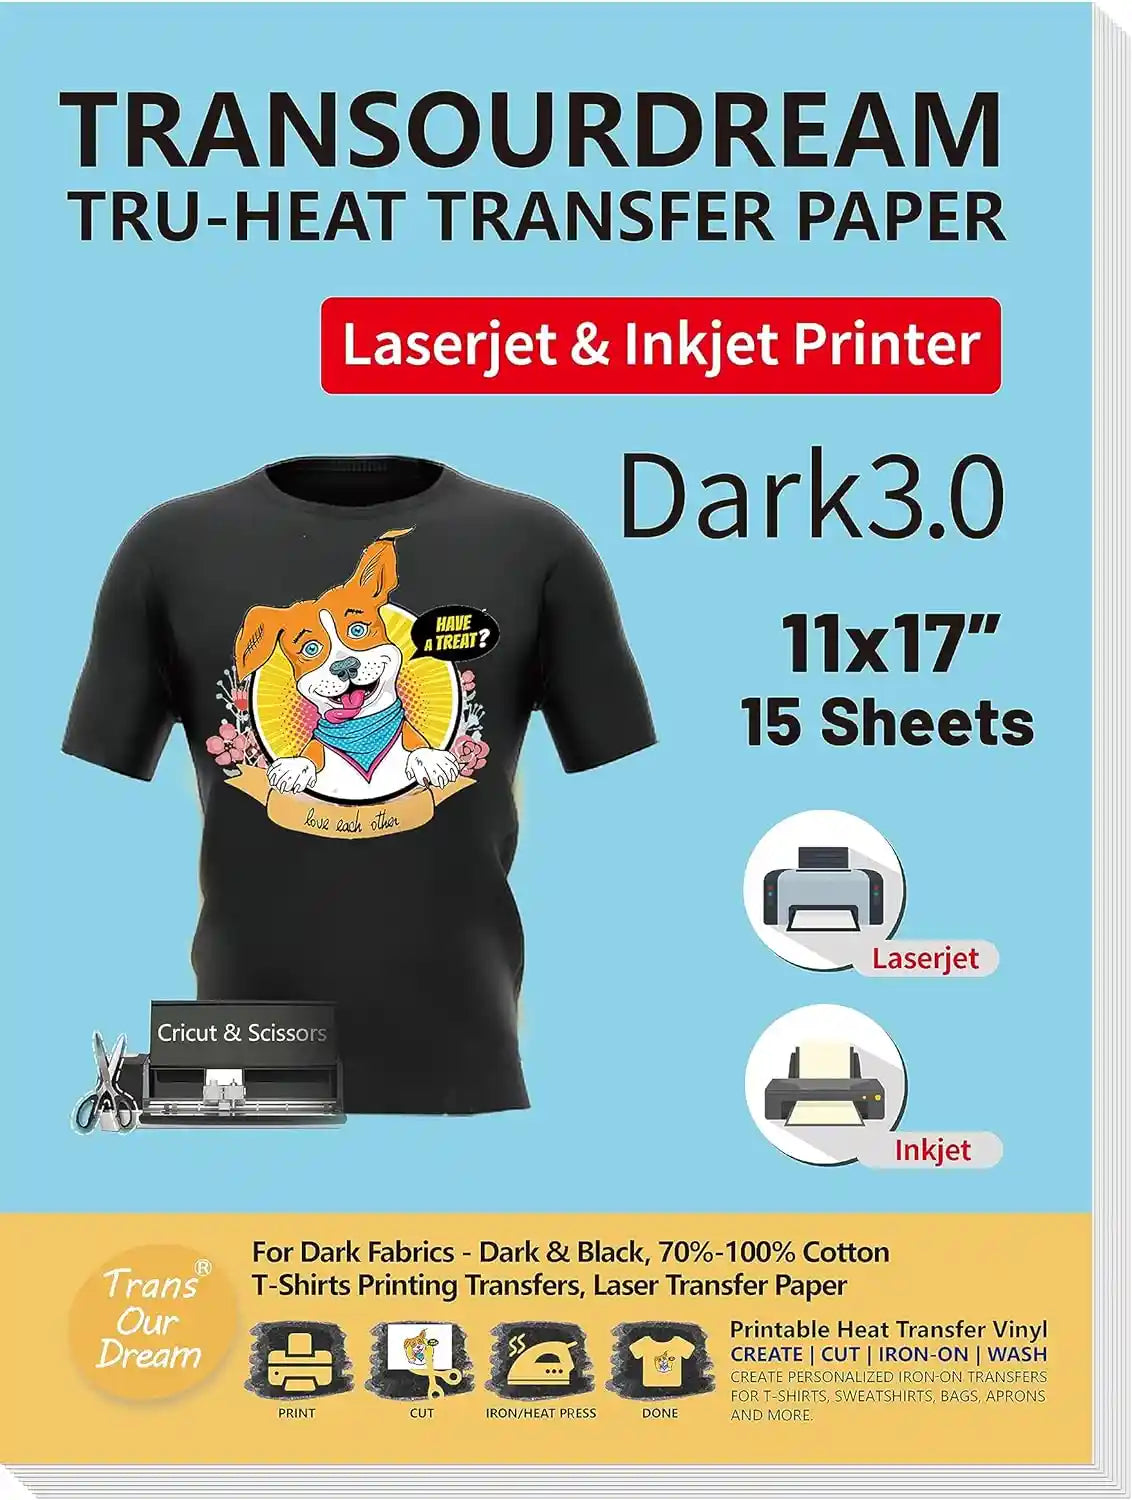 Heat Transfer Paper on Iron Sheets for Dark Fabrics | Inkjet & LaserJet Printers, Non-Toxic | Dark 3.0